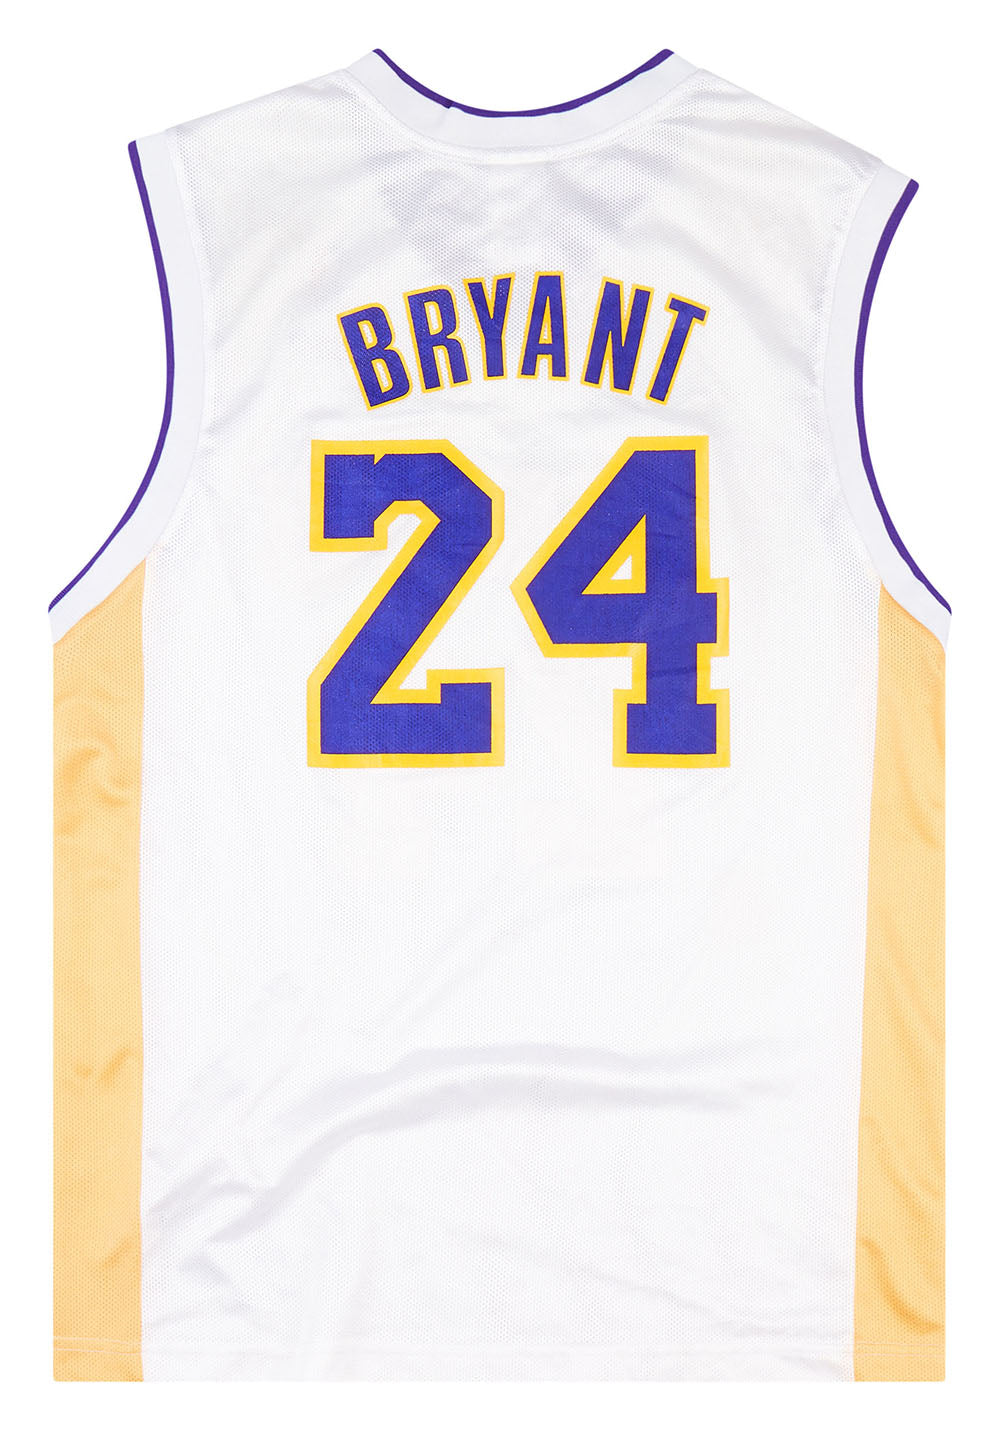 LA Lakers Kobe Bryant #8 Reebok Black Jersey - 5 Star Vintage